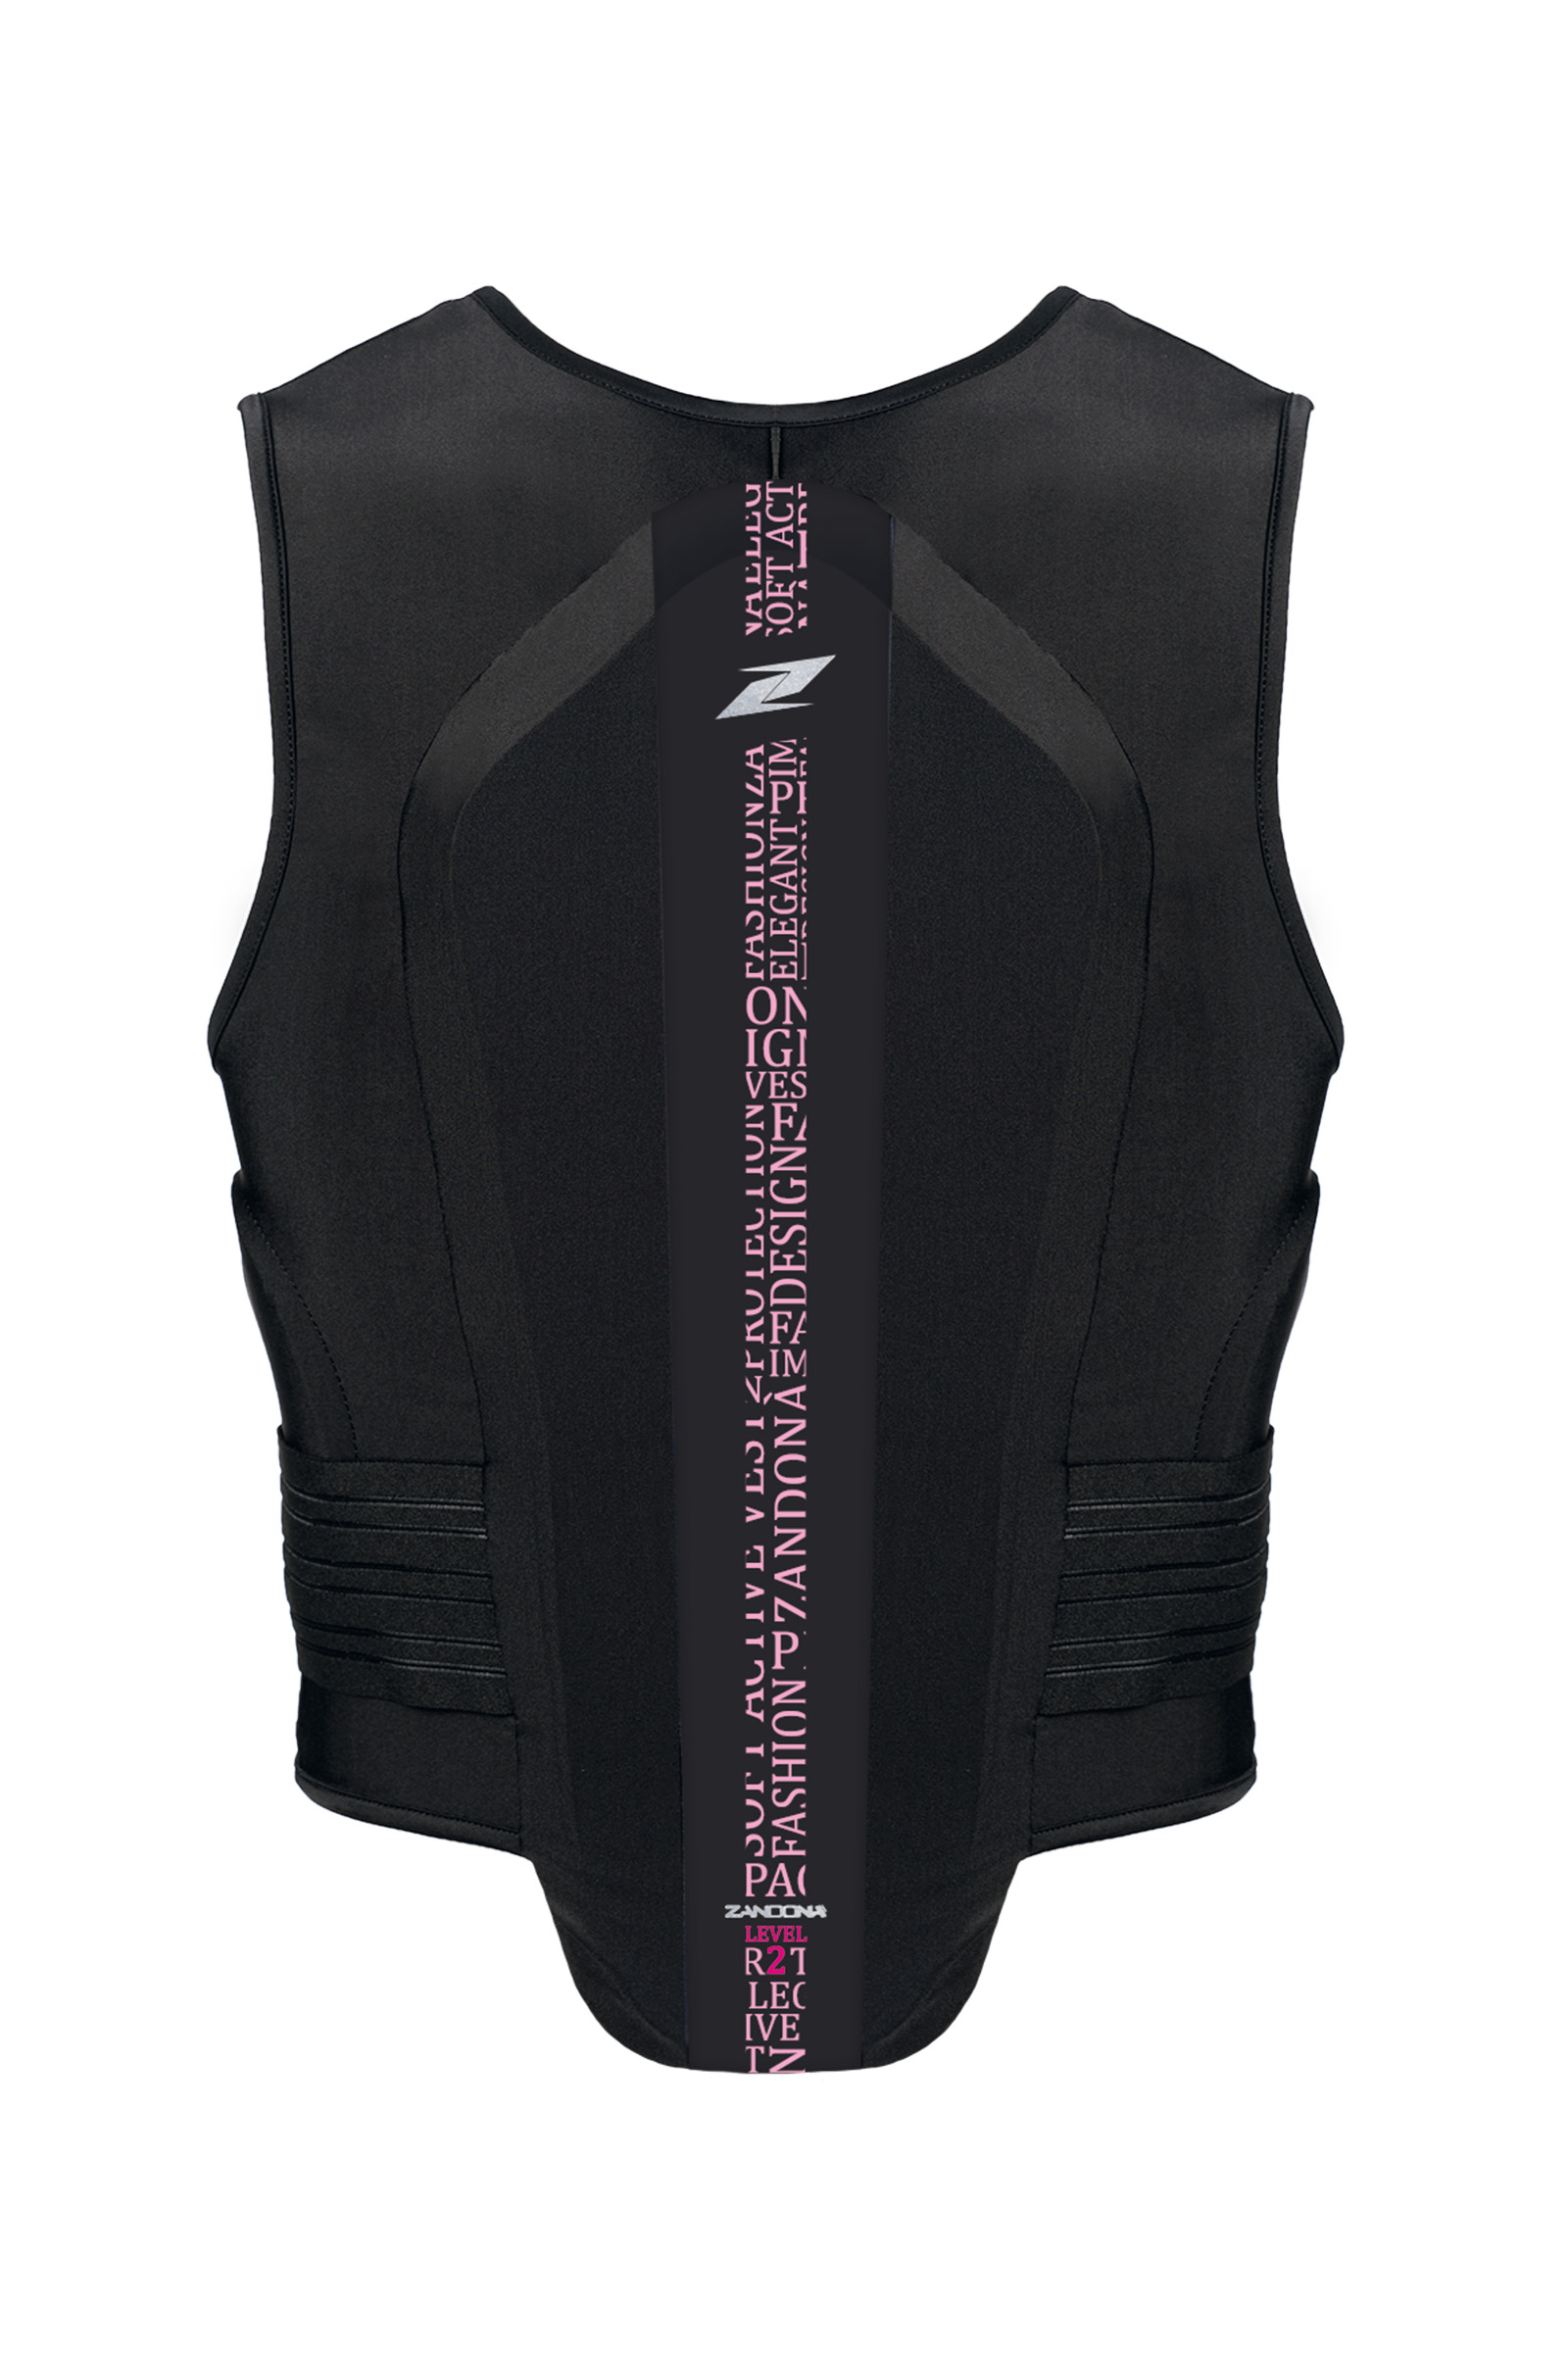 Buy Zandona Pro Back Soft (158-167cm) Vest x6 Protector